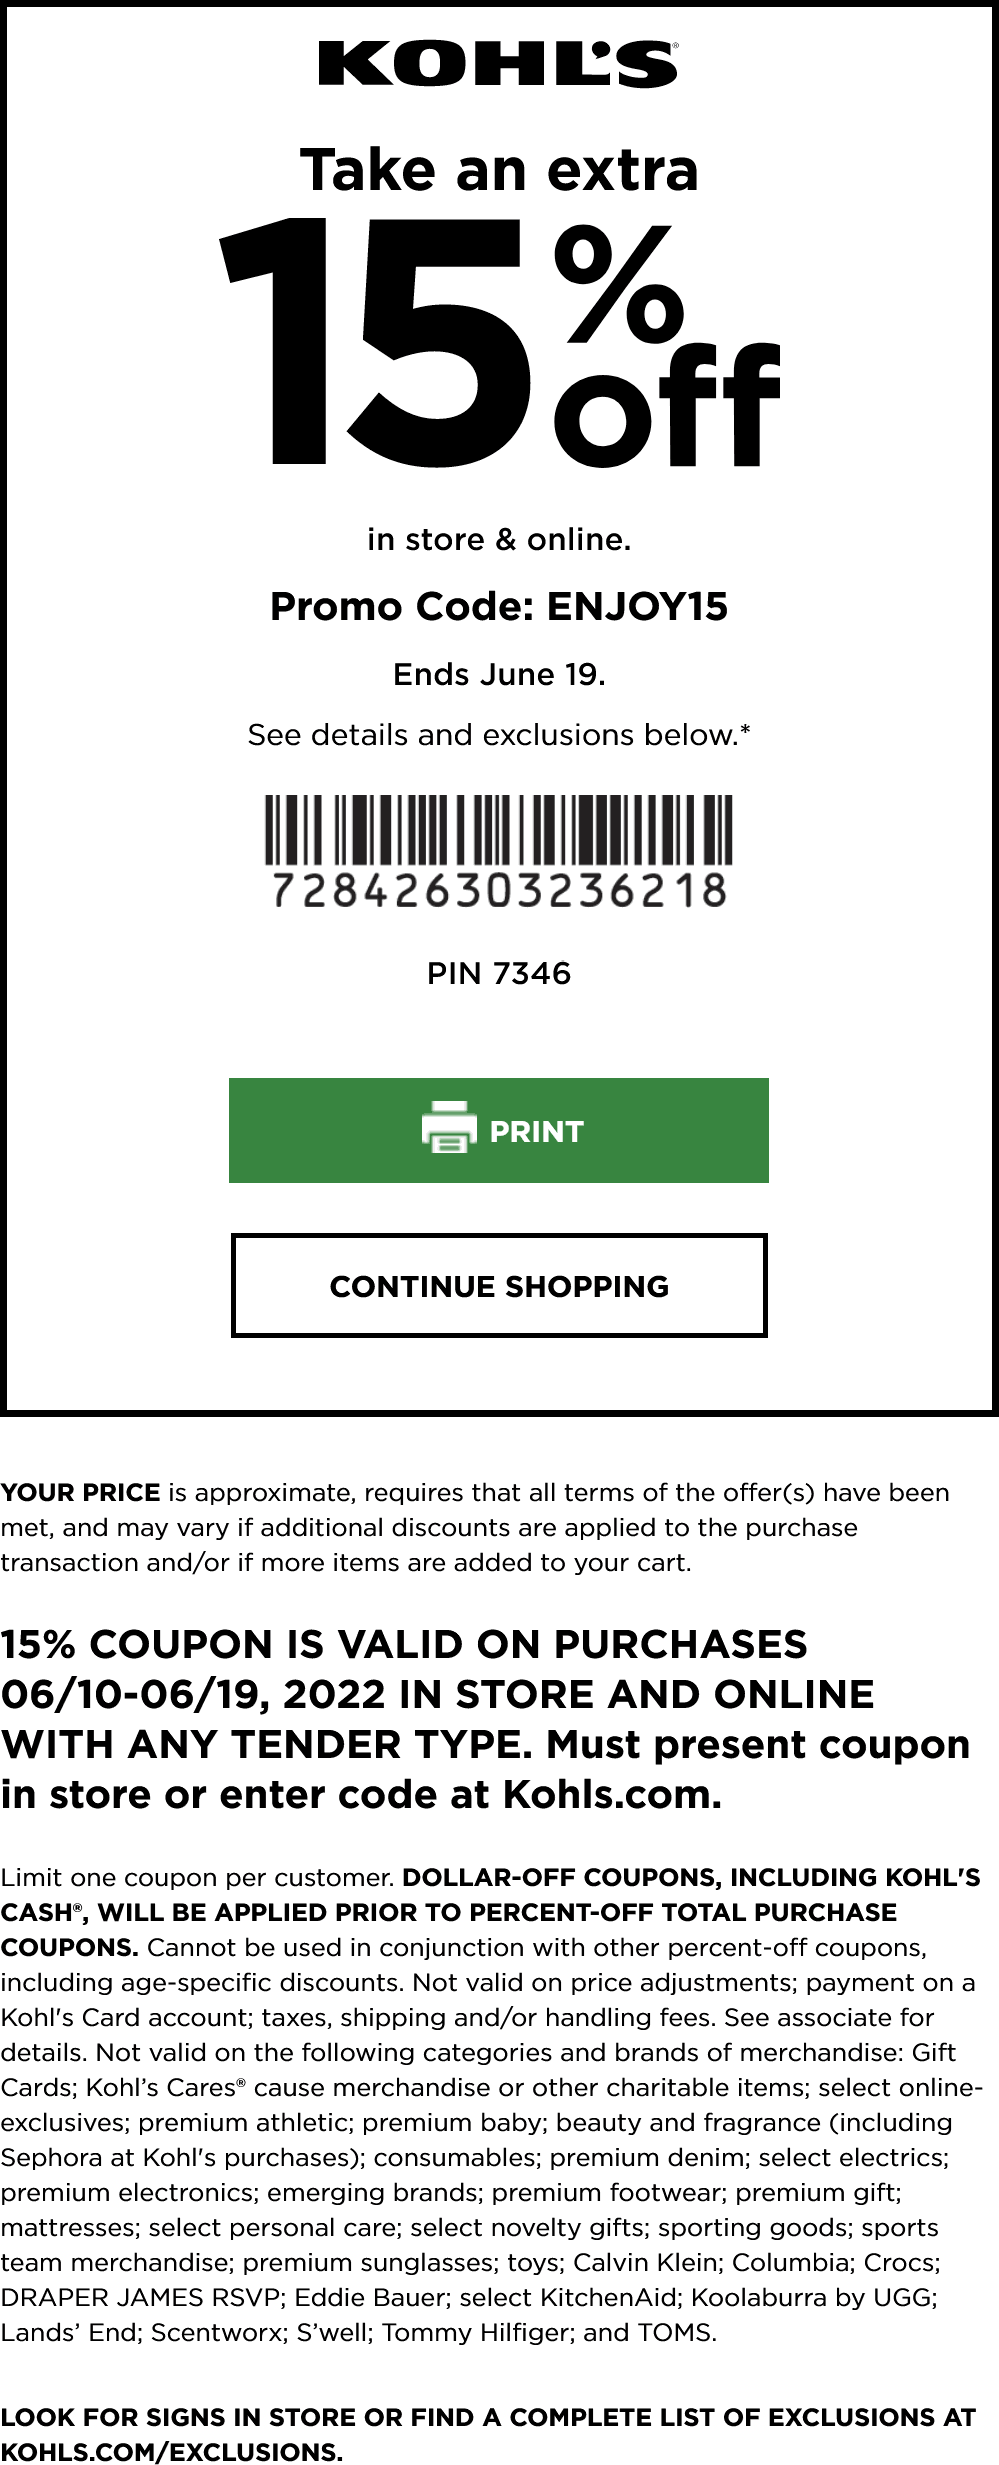 Kohls coupons & promo code for [December 2022]